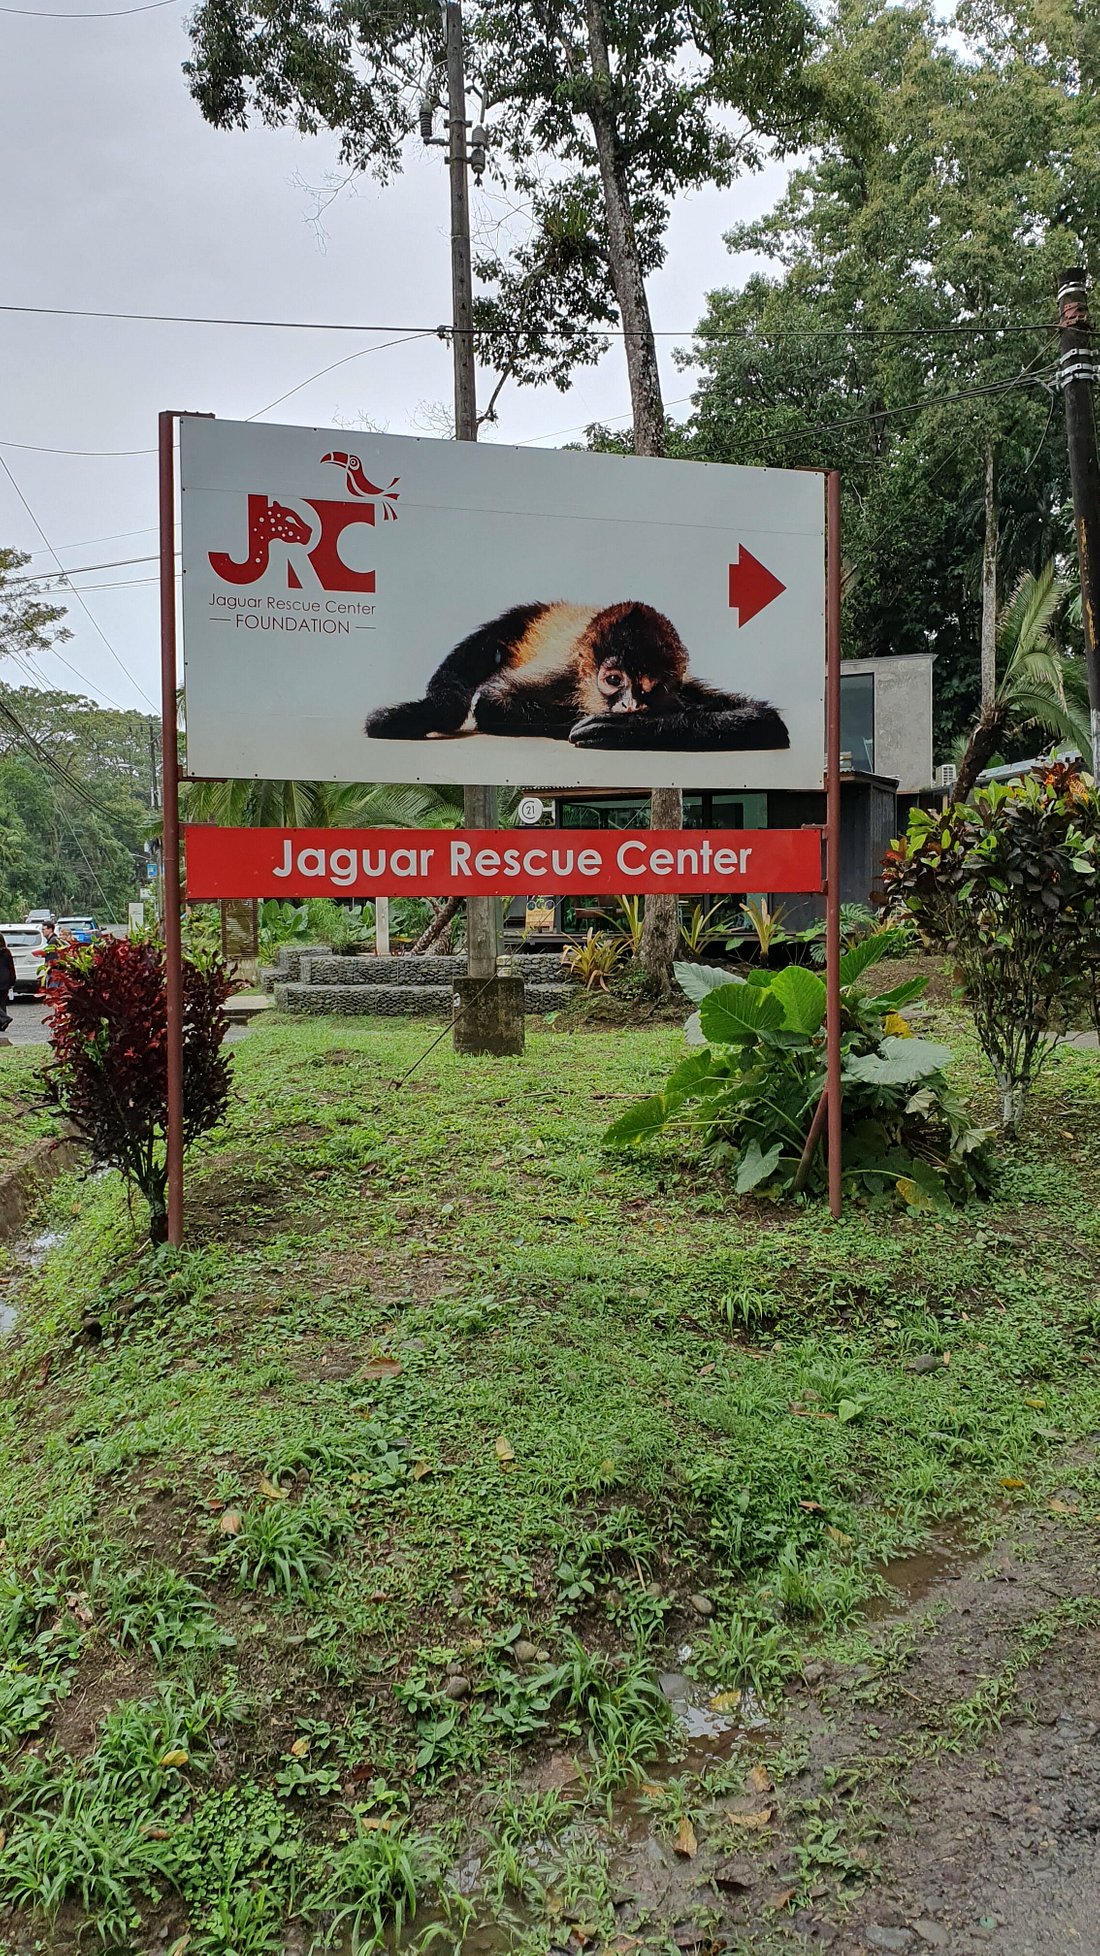 fundation-jaguar-rescue-center-entrance